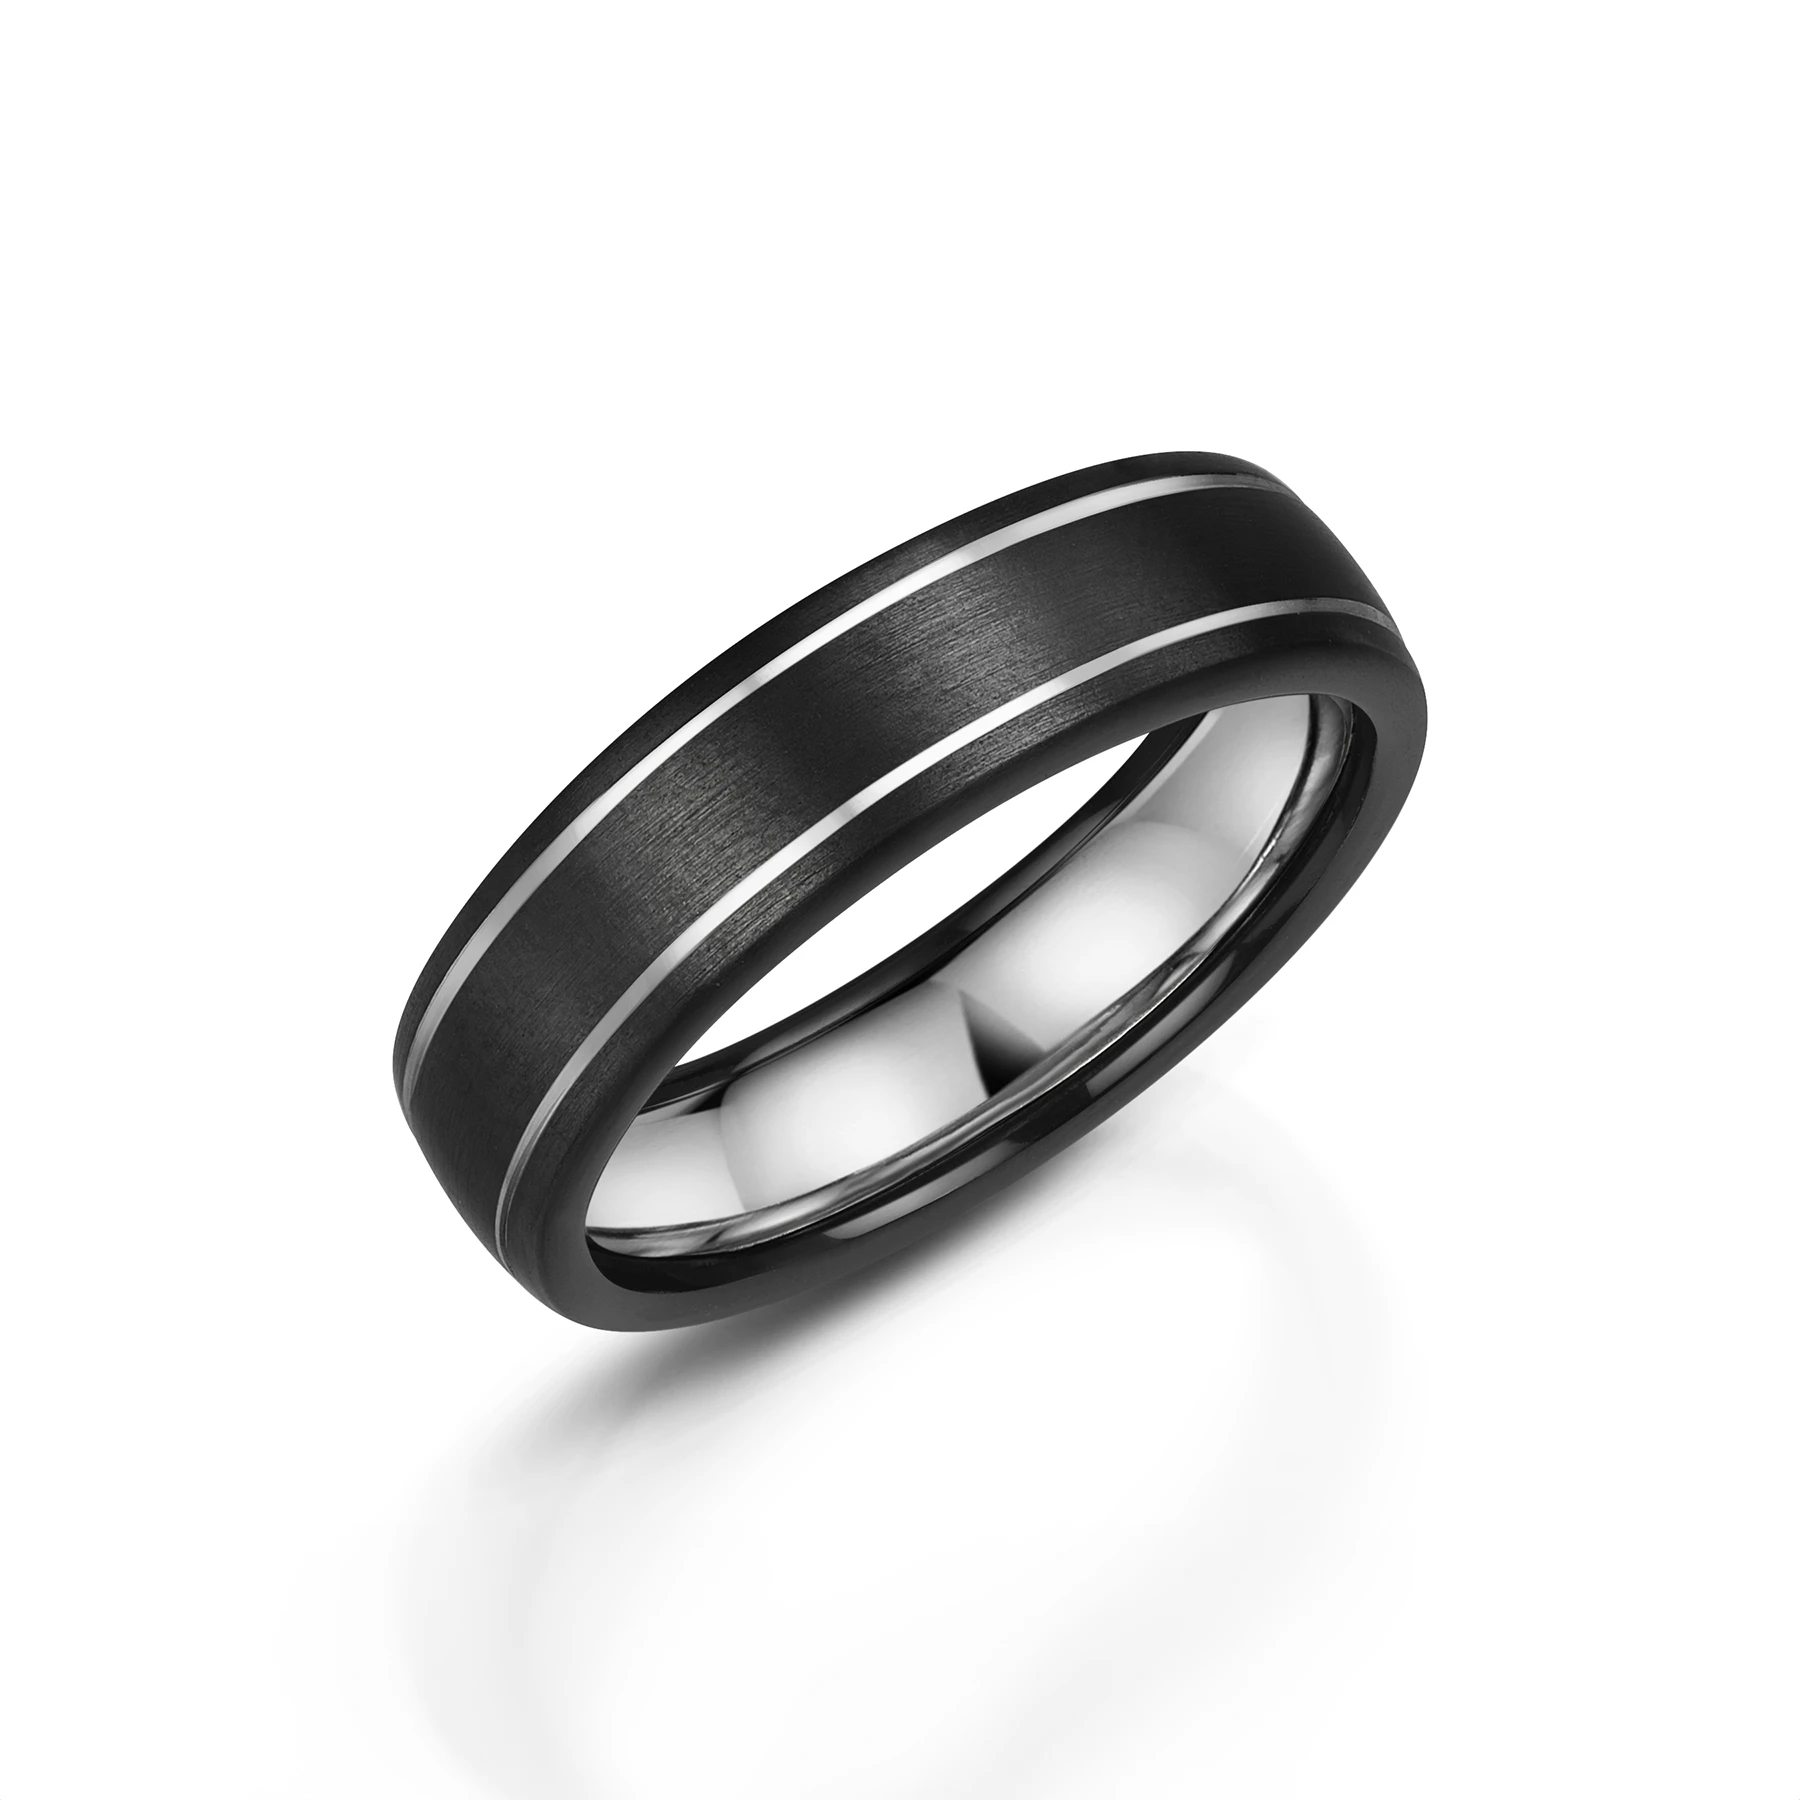 Matte Black Zirconium Wedding Ring with Silver Inlays